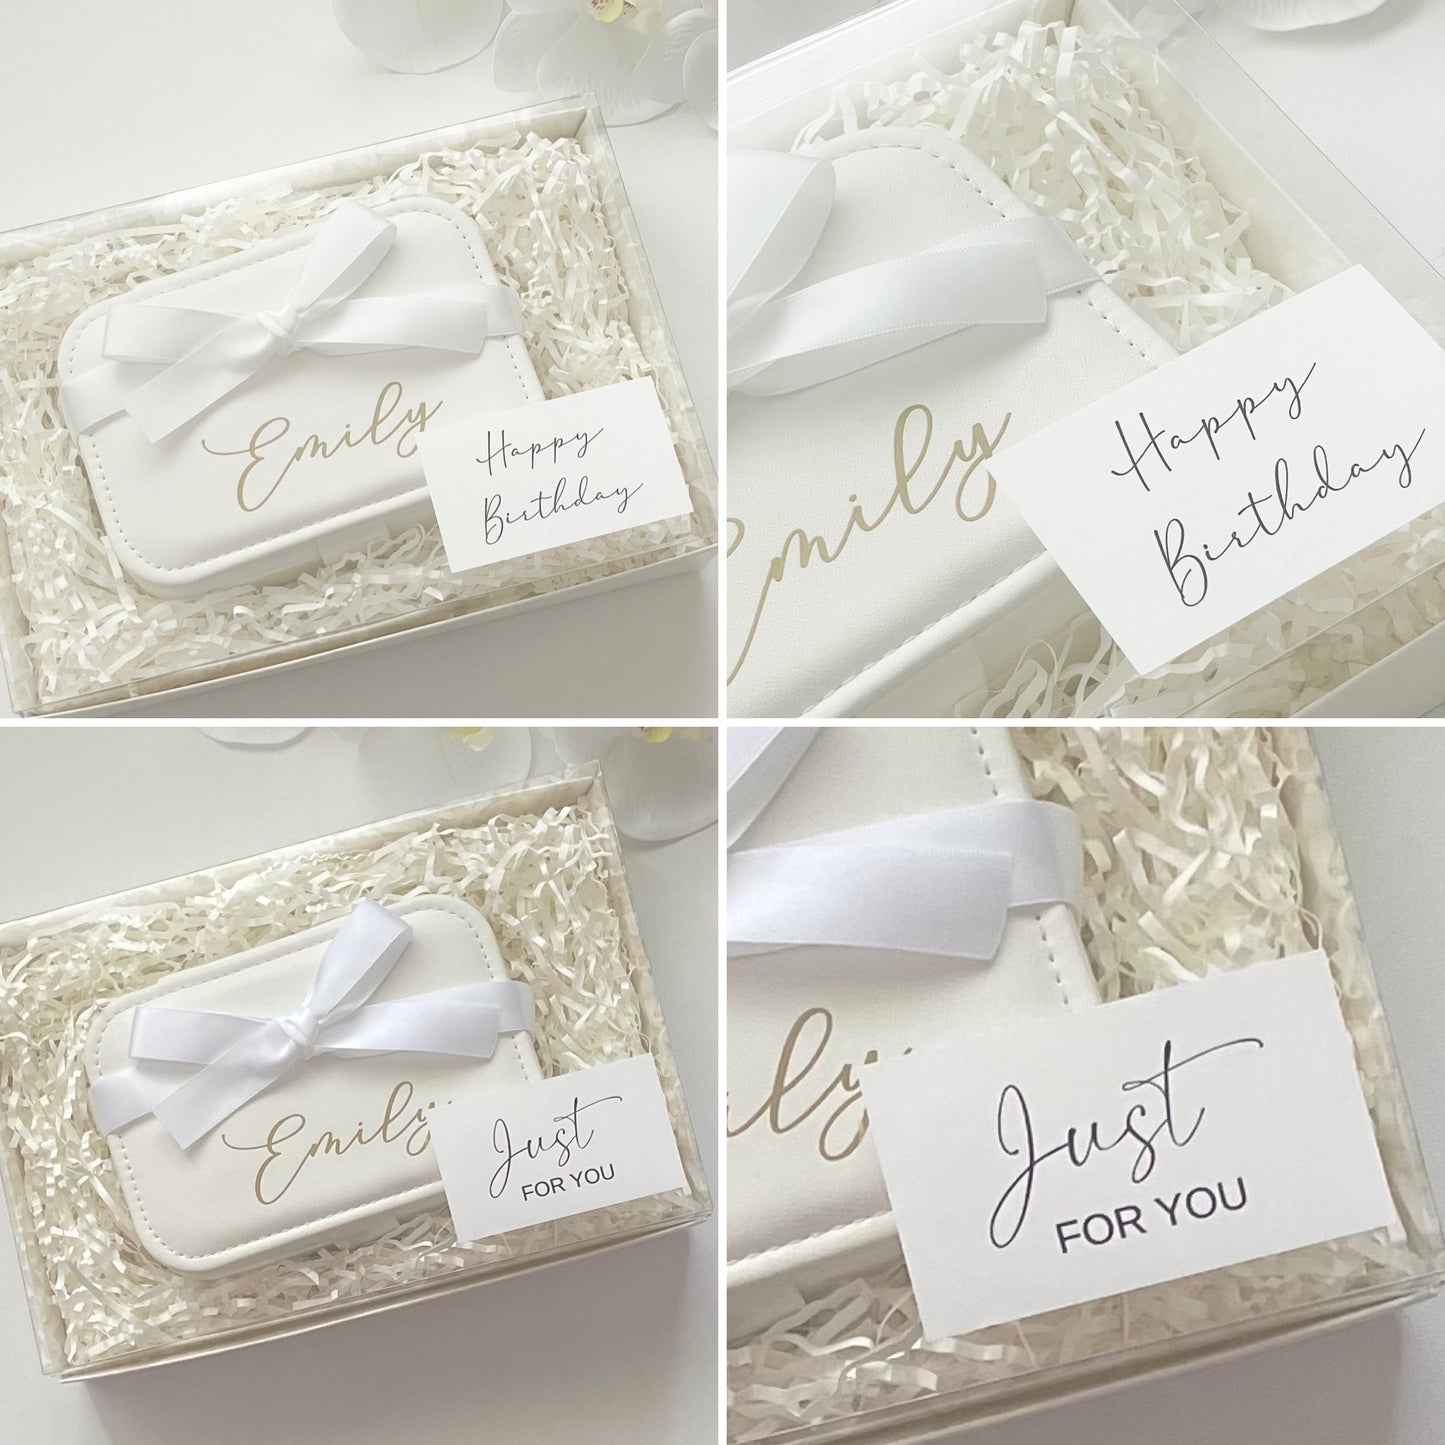 Personalized White Jewelry Box - Small